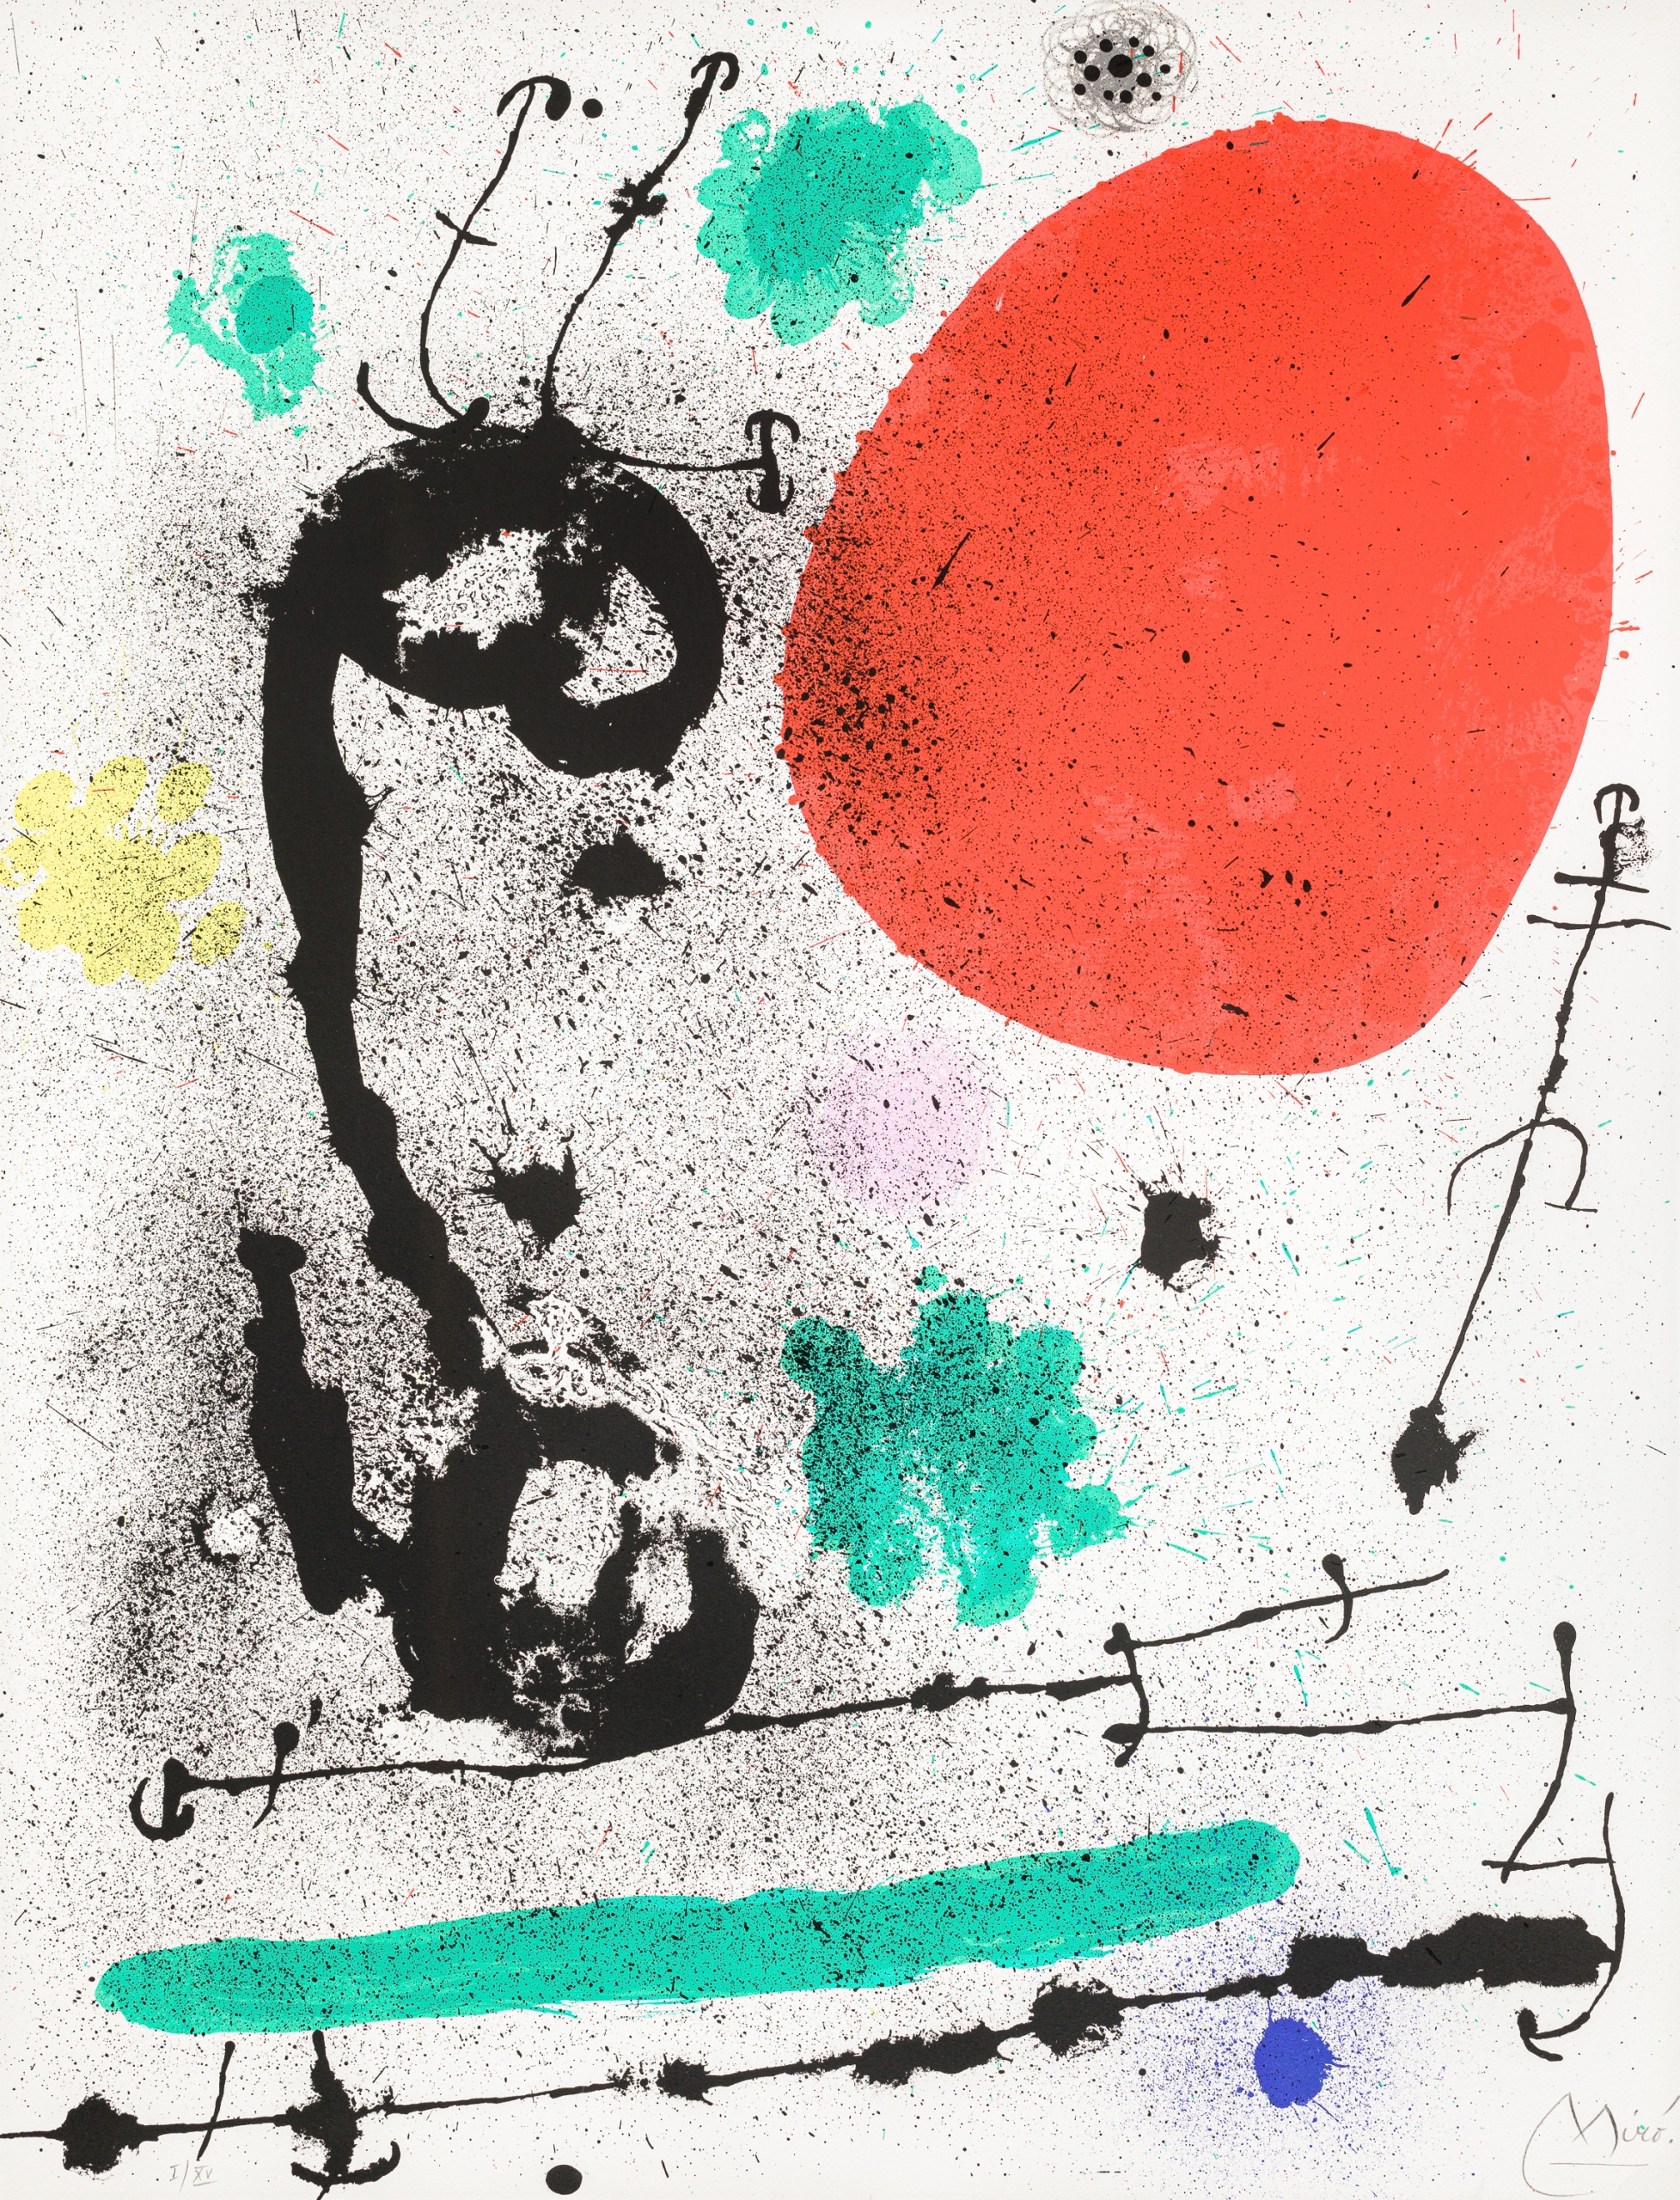 Joàn Miró, Migratory Bird II